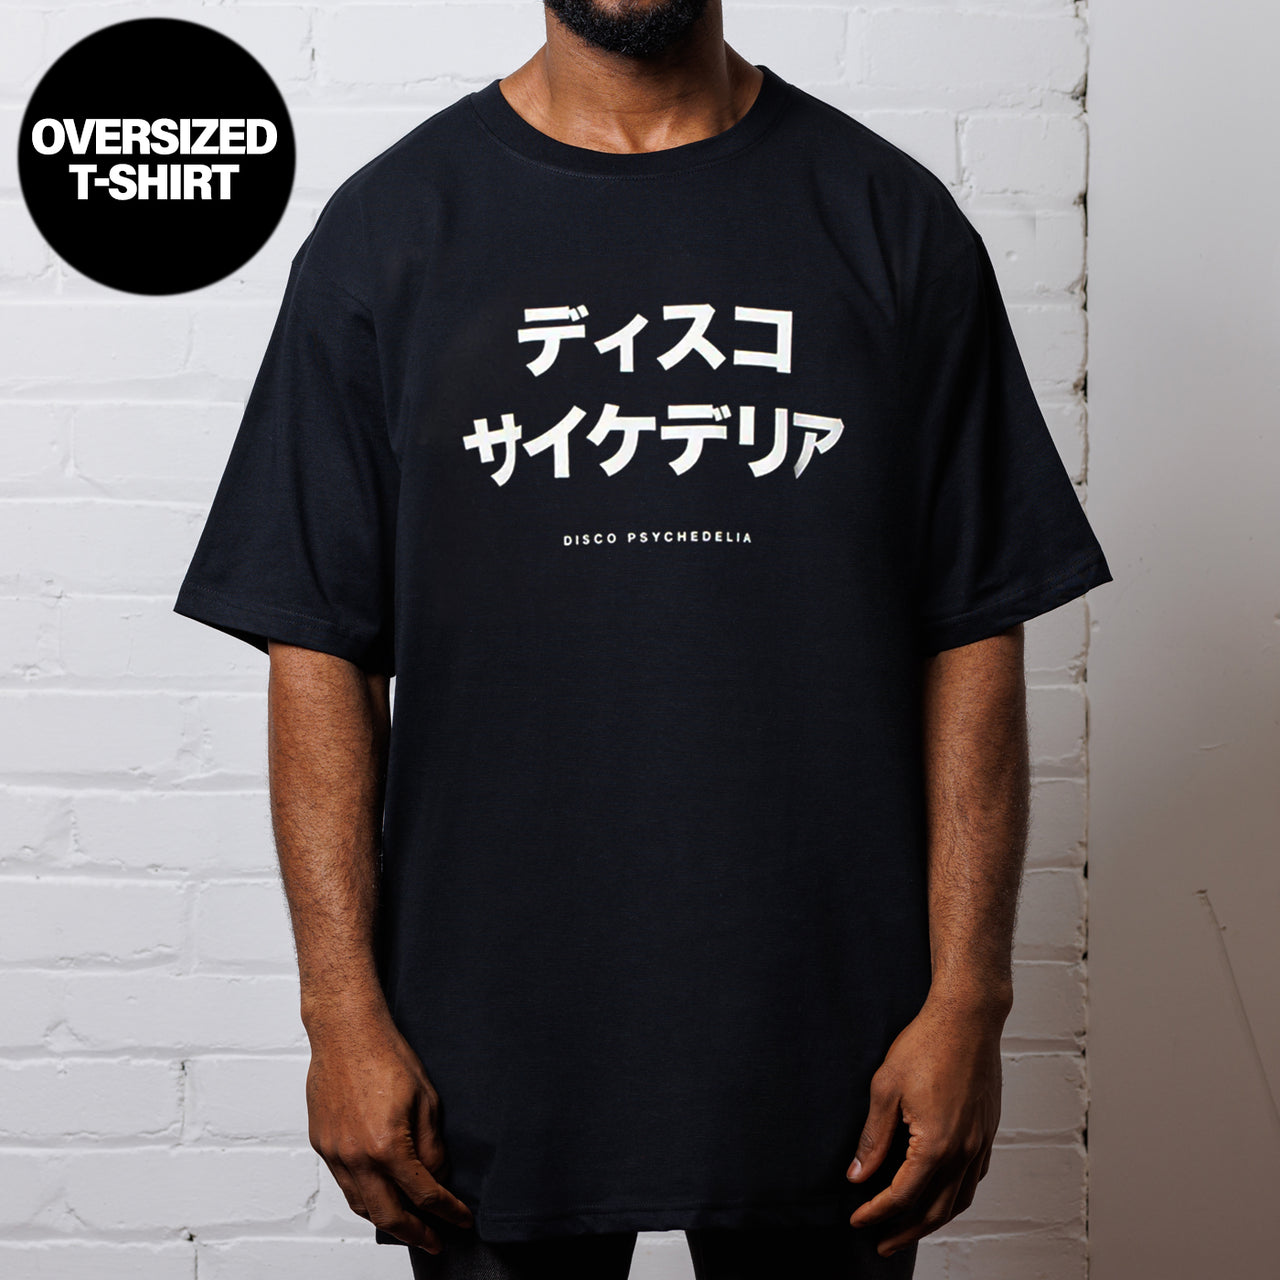 Disco Psychedelia - Oversized Tshirt - Black